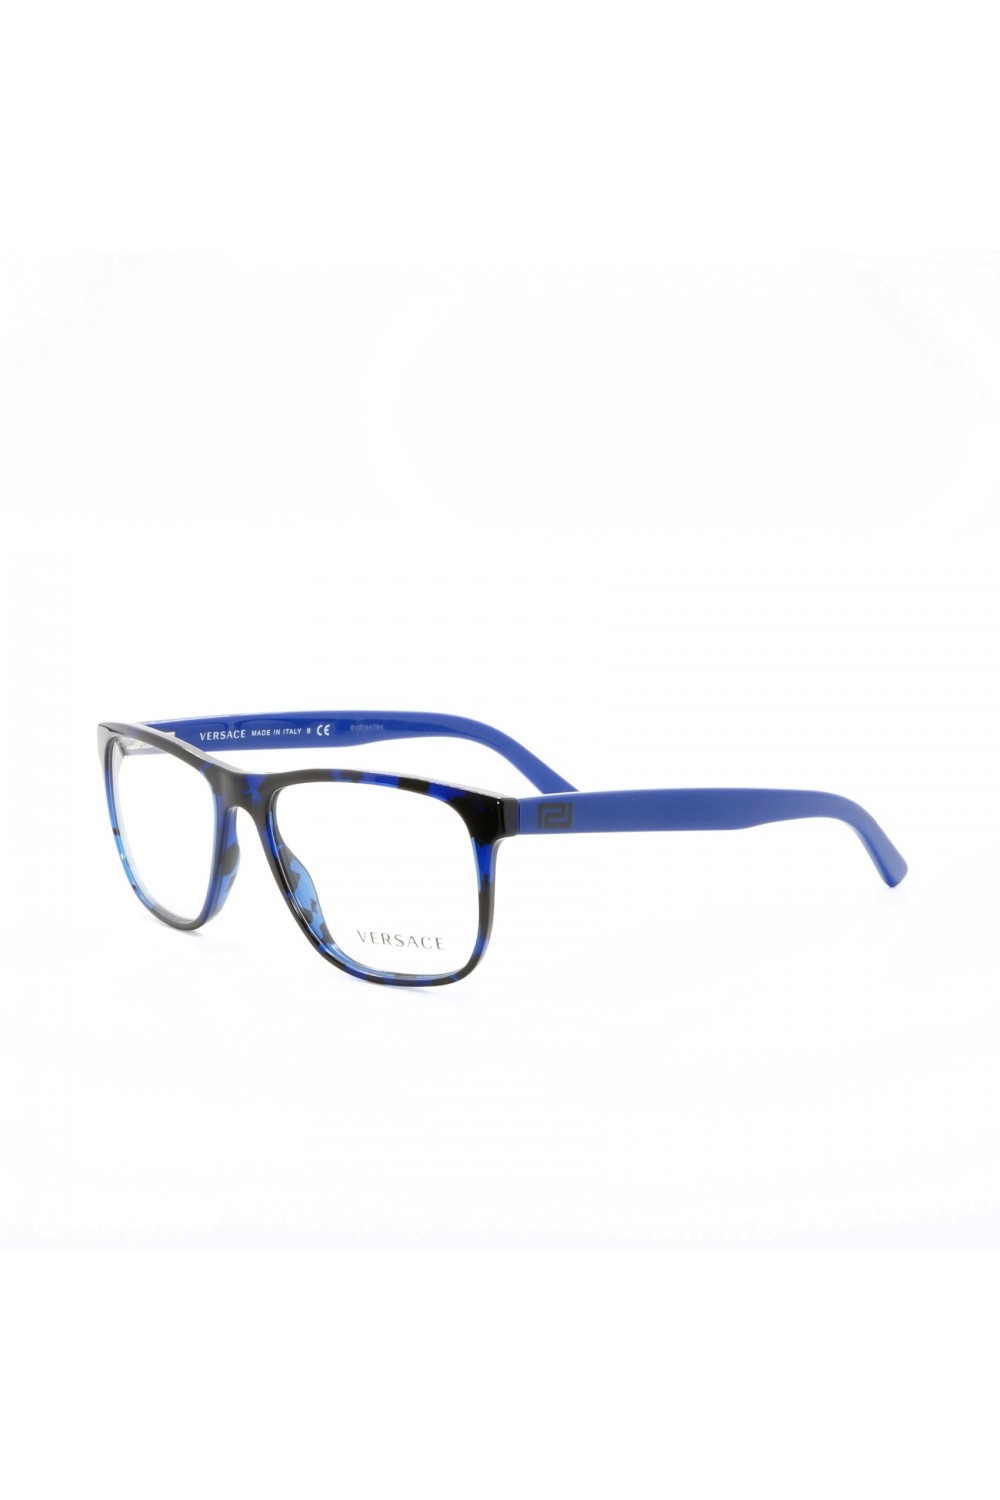 Versace - Occhiali da vista in celluloide squadrati per uomo blu - 3162 980